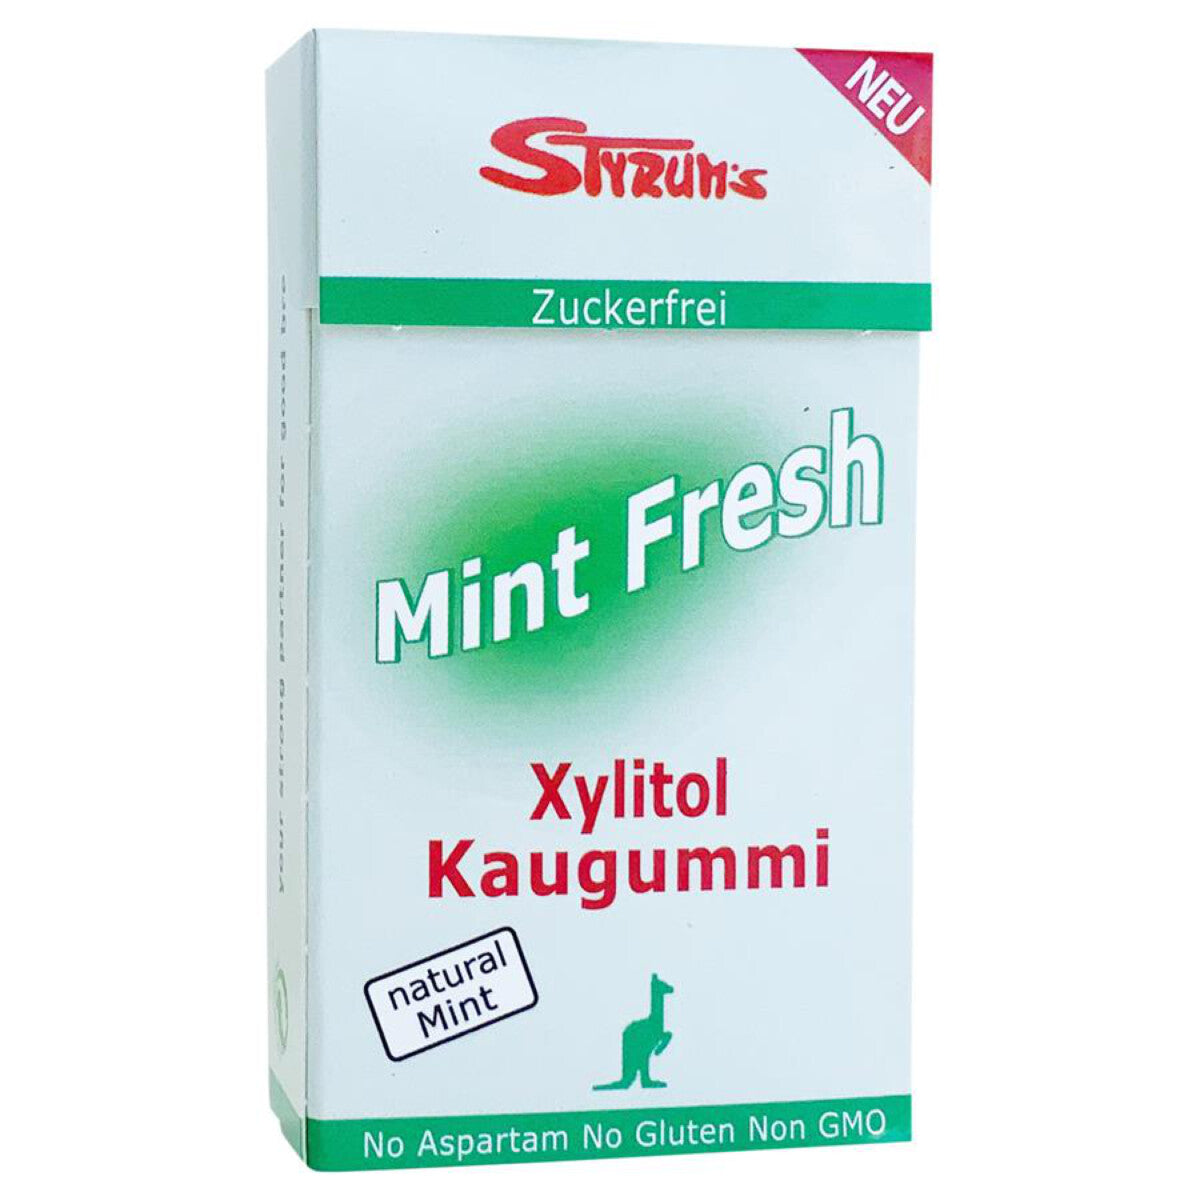 STYRUMS Mint Fresh Kaugummi - 30 g